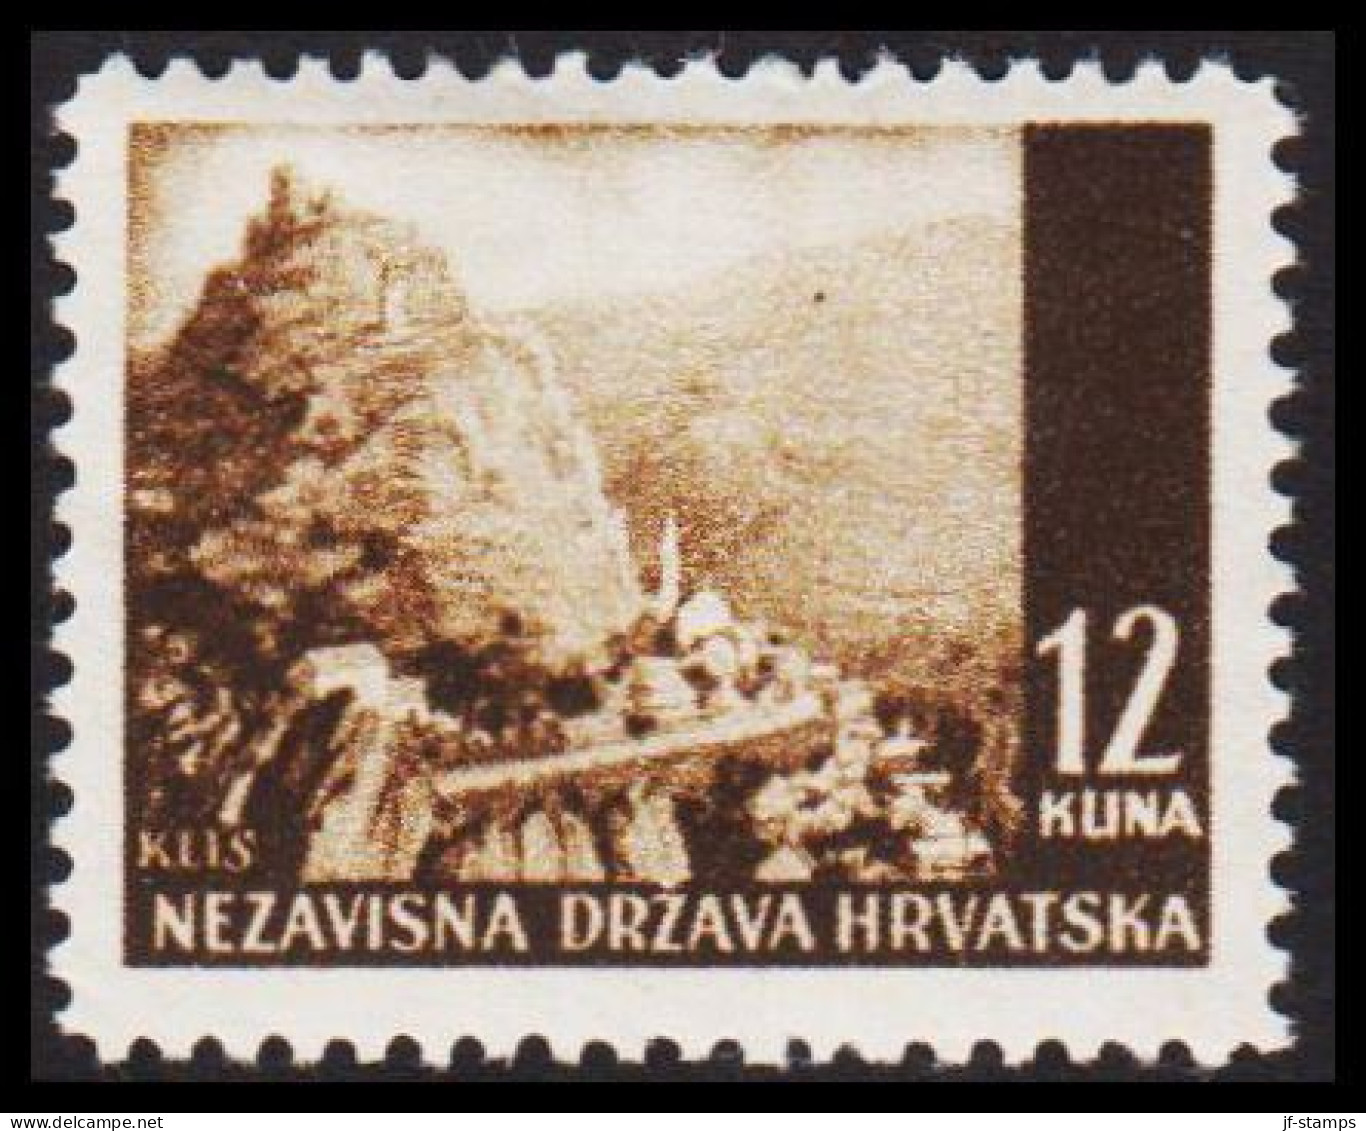 1941-1942. HRVATSKA Landscapes 12 KUNA. Hinged. (Michel 61) - JF546055 - Kroatien